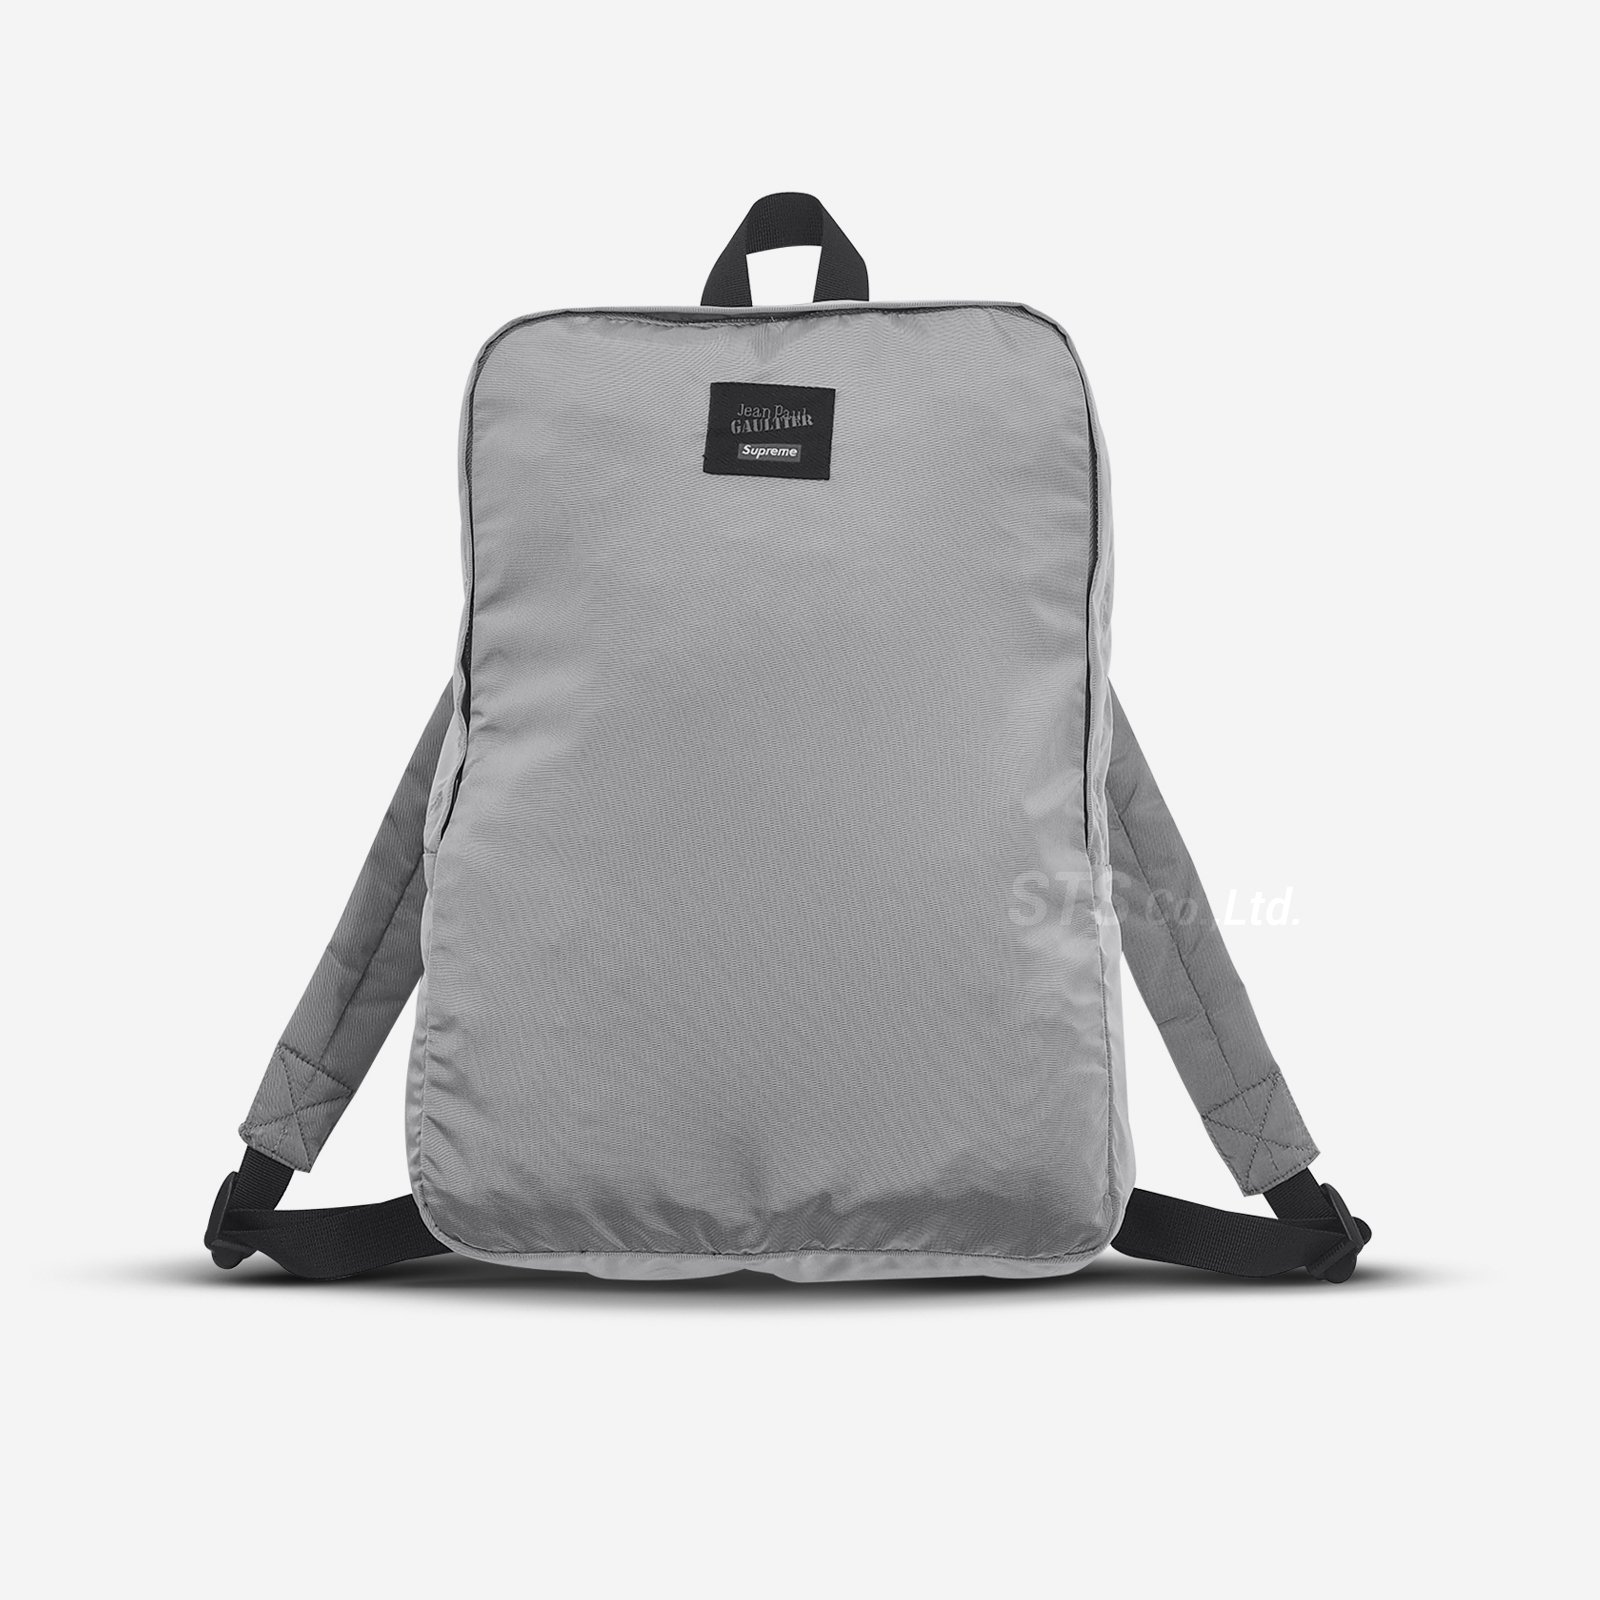 Supreme jean paul gaultier backpack MA-1